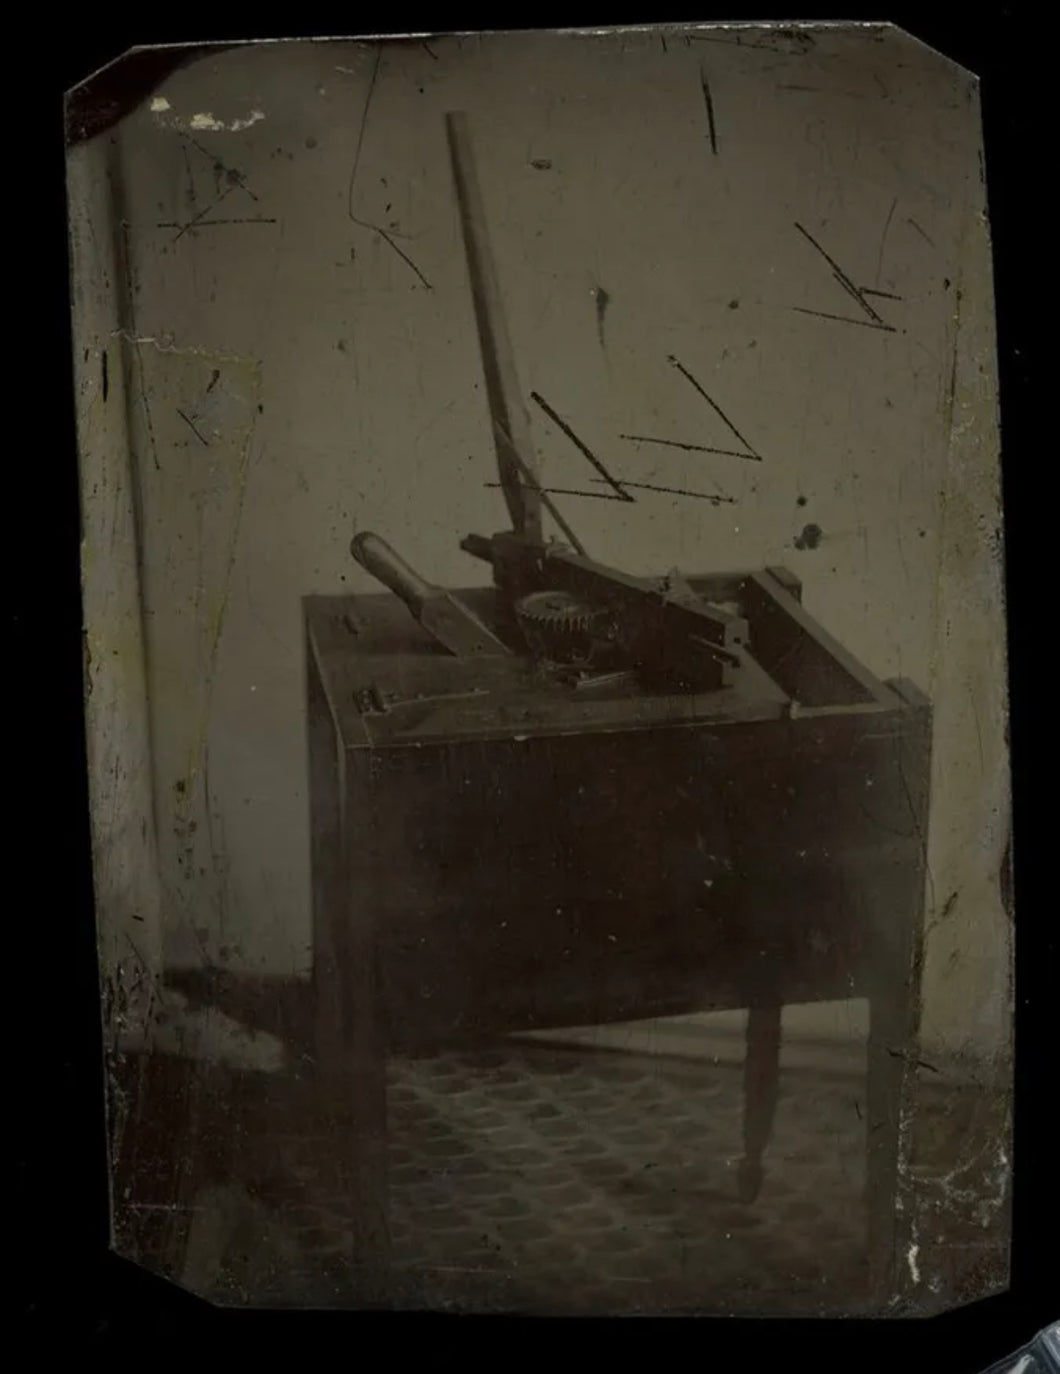 tintype of a WASHING MACHINE maybe patent model! rare unusual Subject 1800s photo